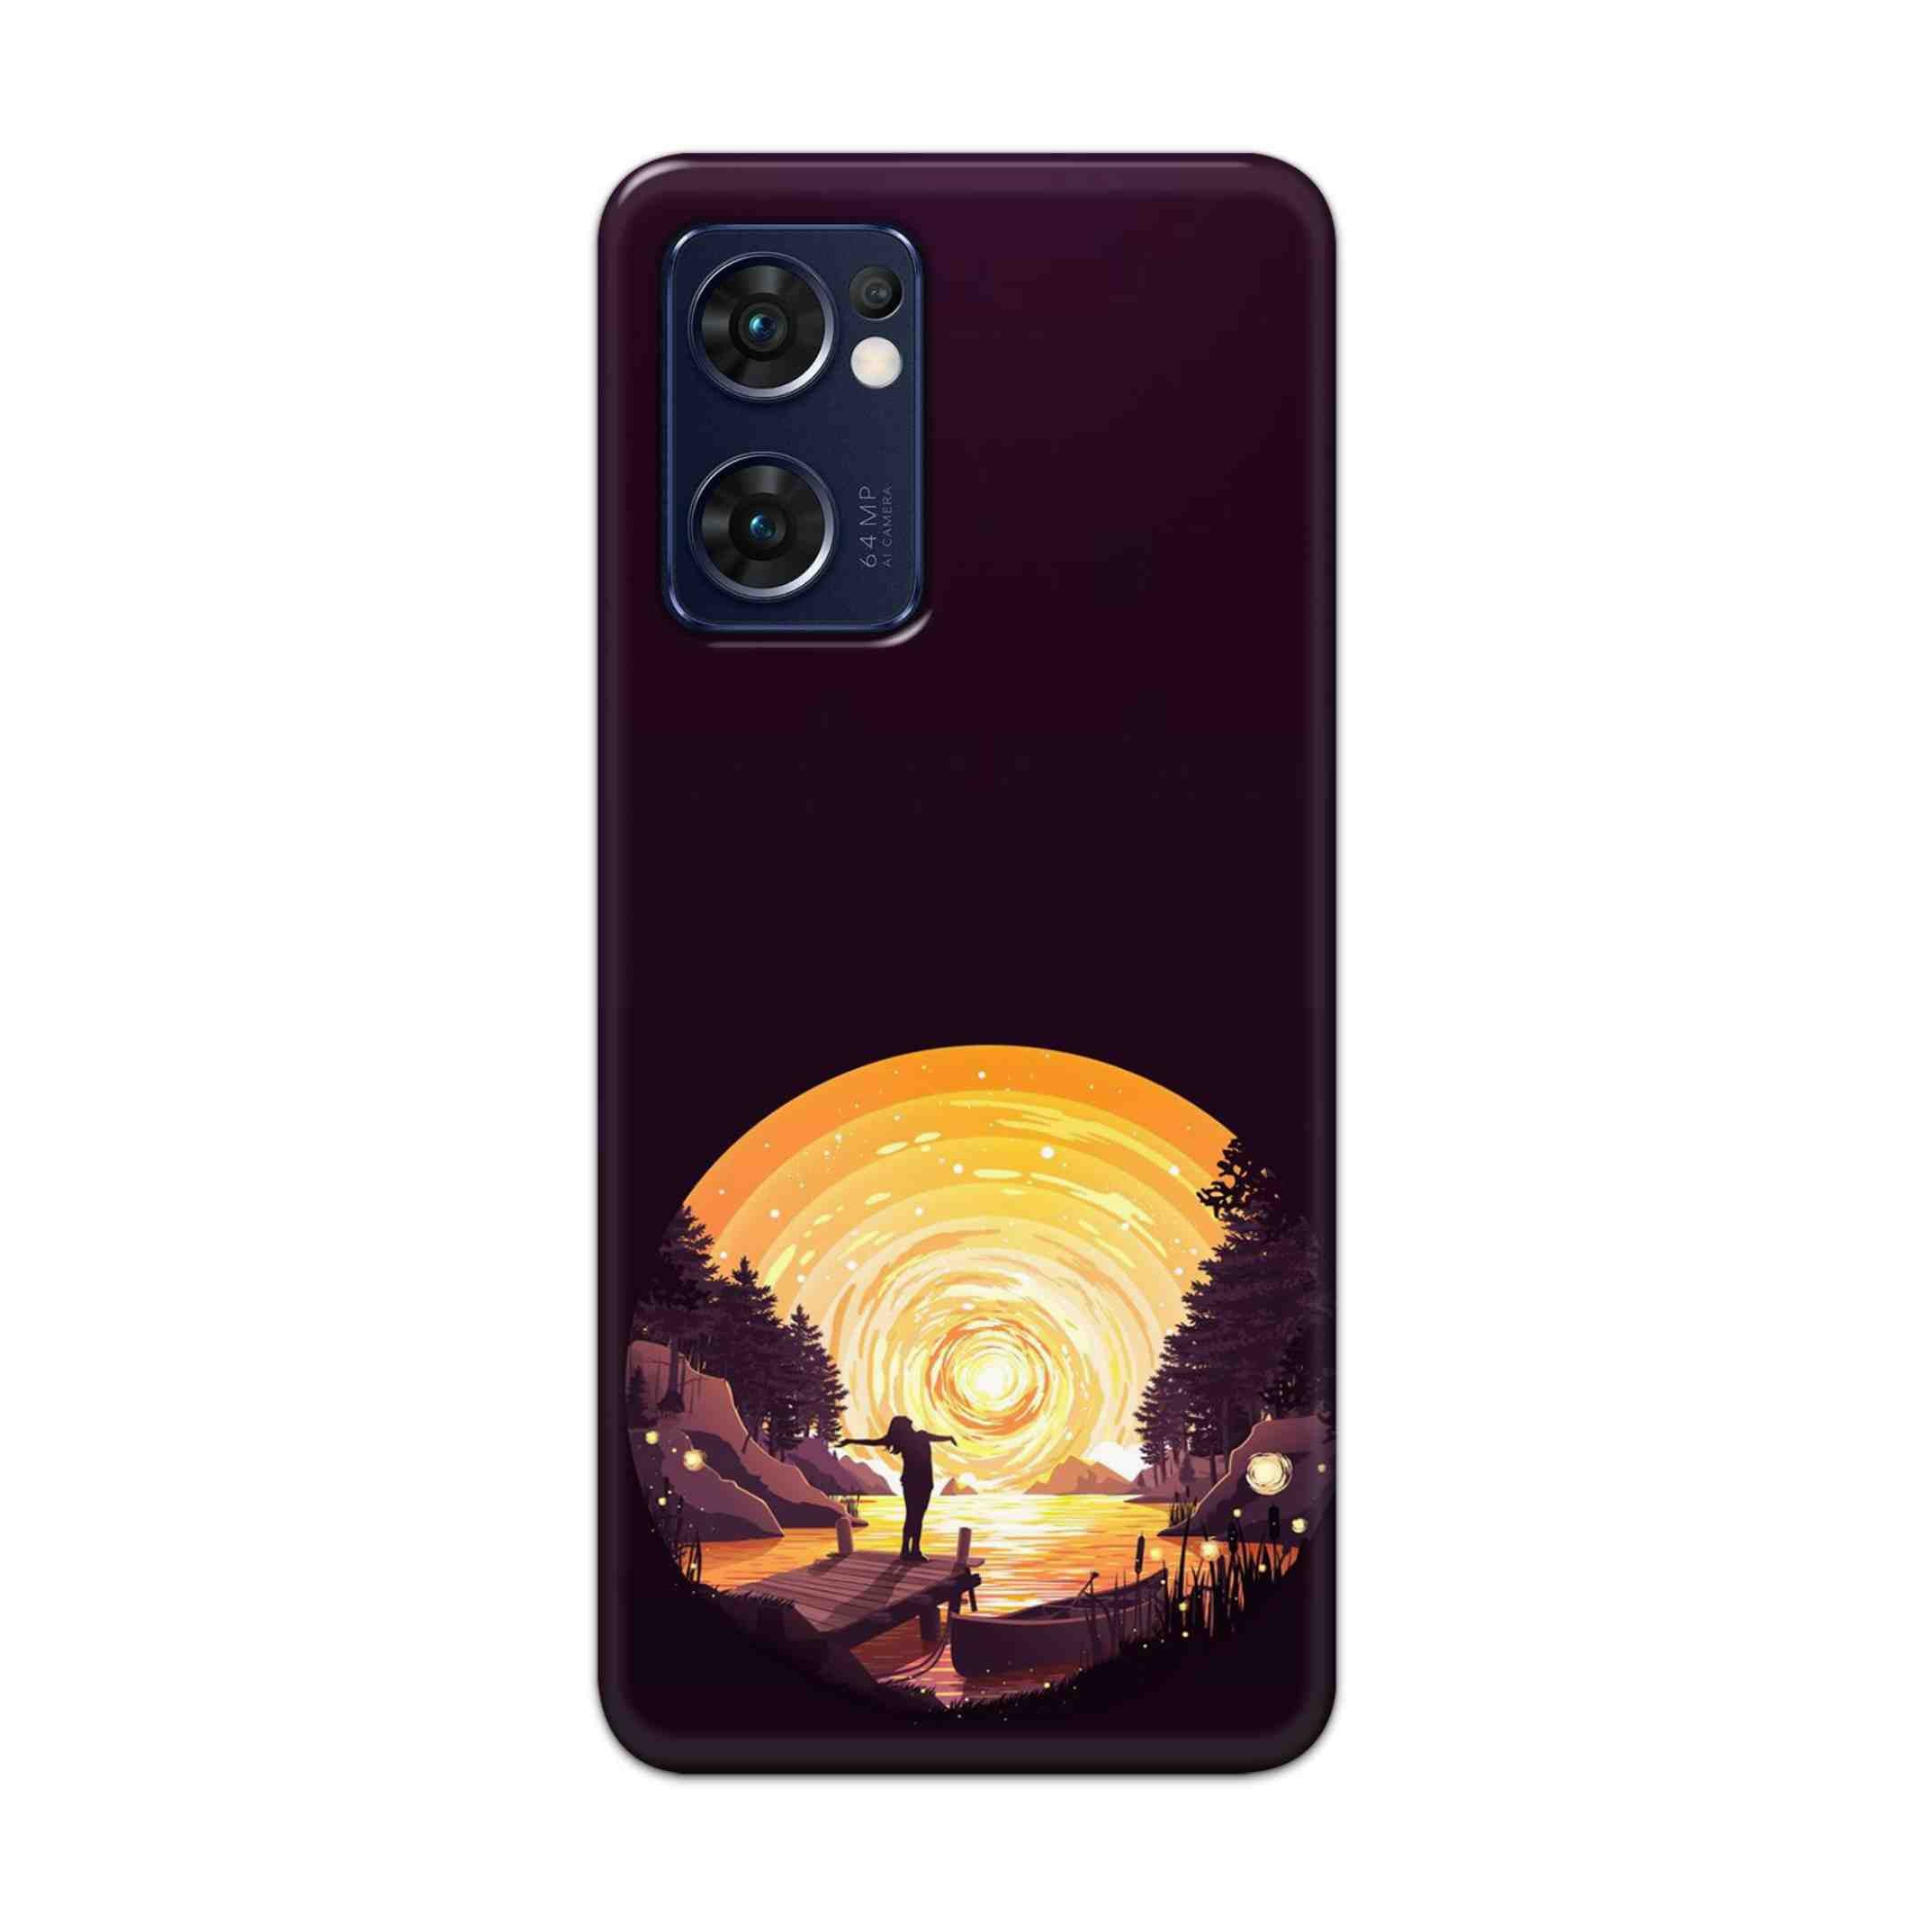 Buy Night Sunrise Hard Back Mobile Phone Case Cover For Reno 7 5G Online